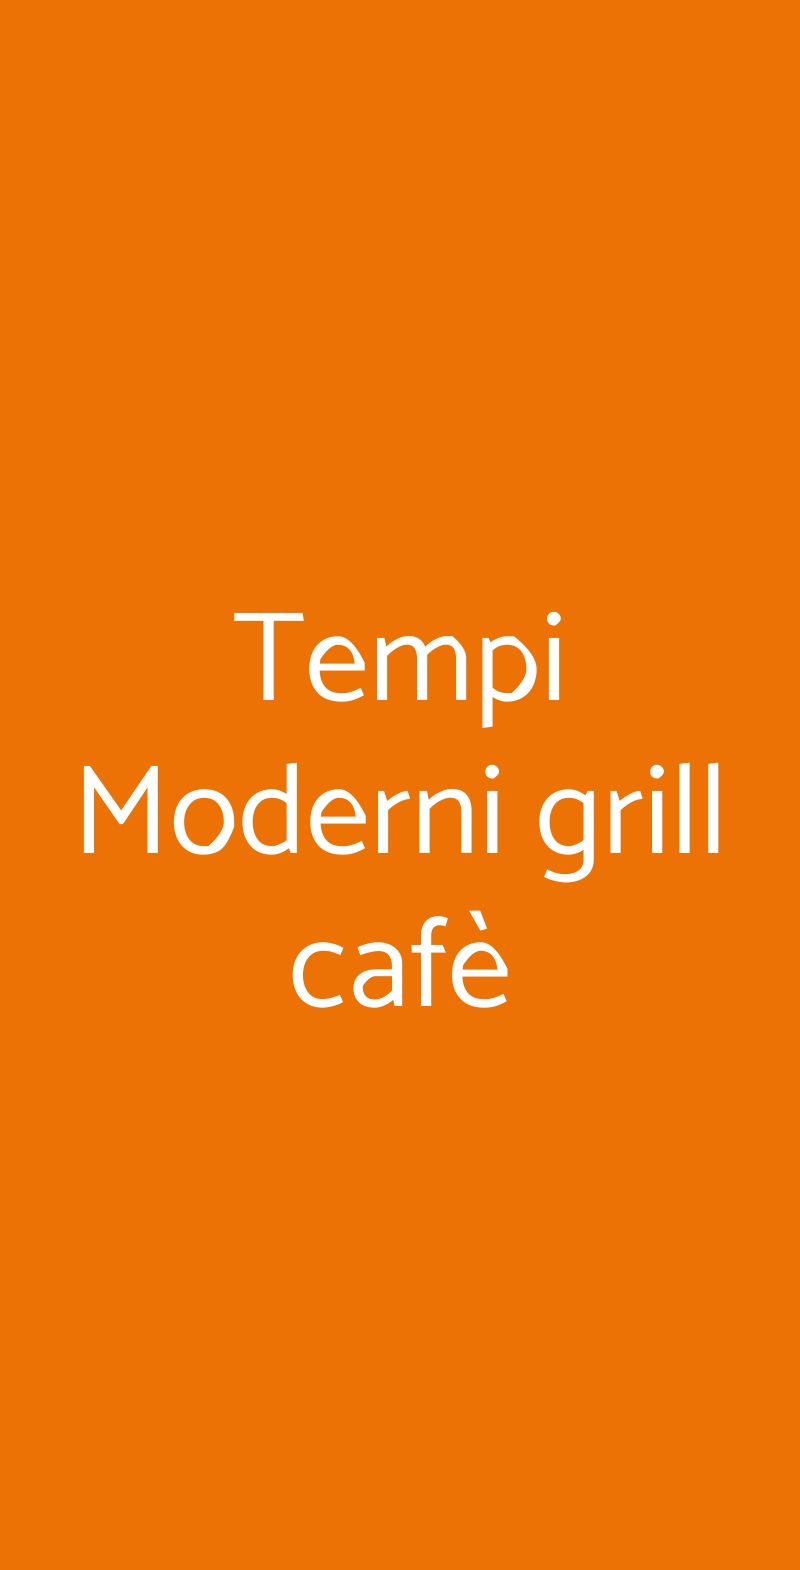 Tempi Moderni grill cafè Parma menù 1 pagina